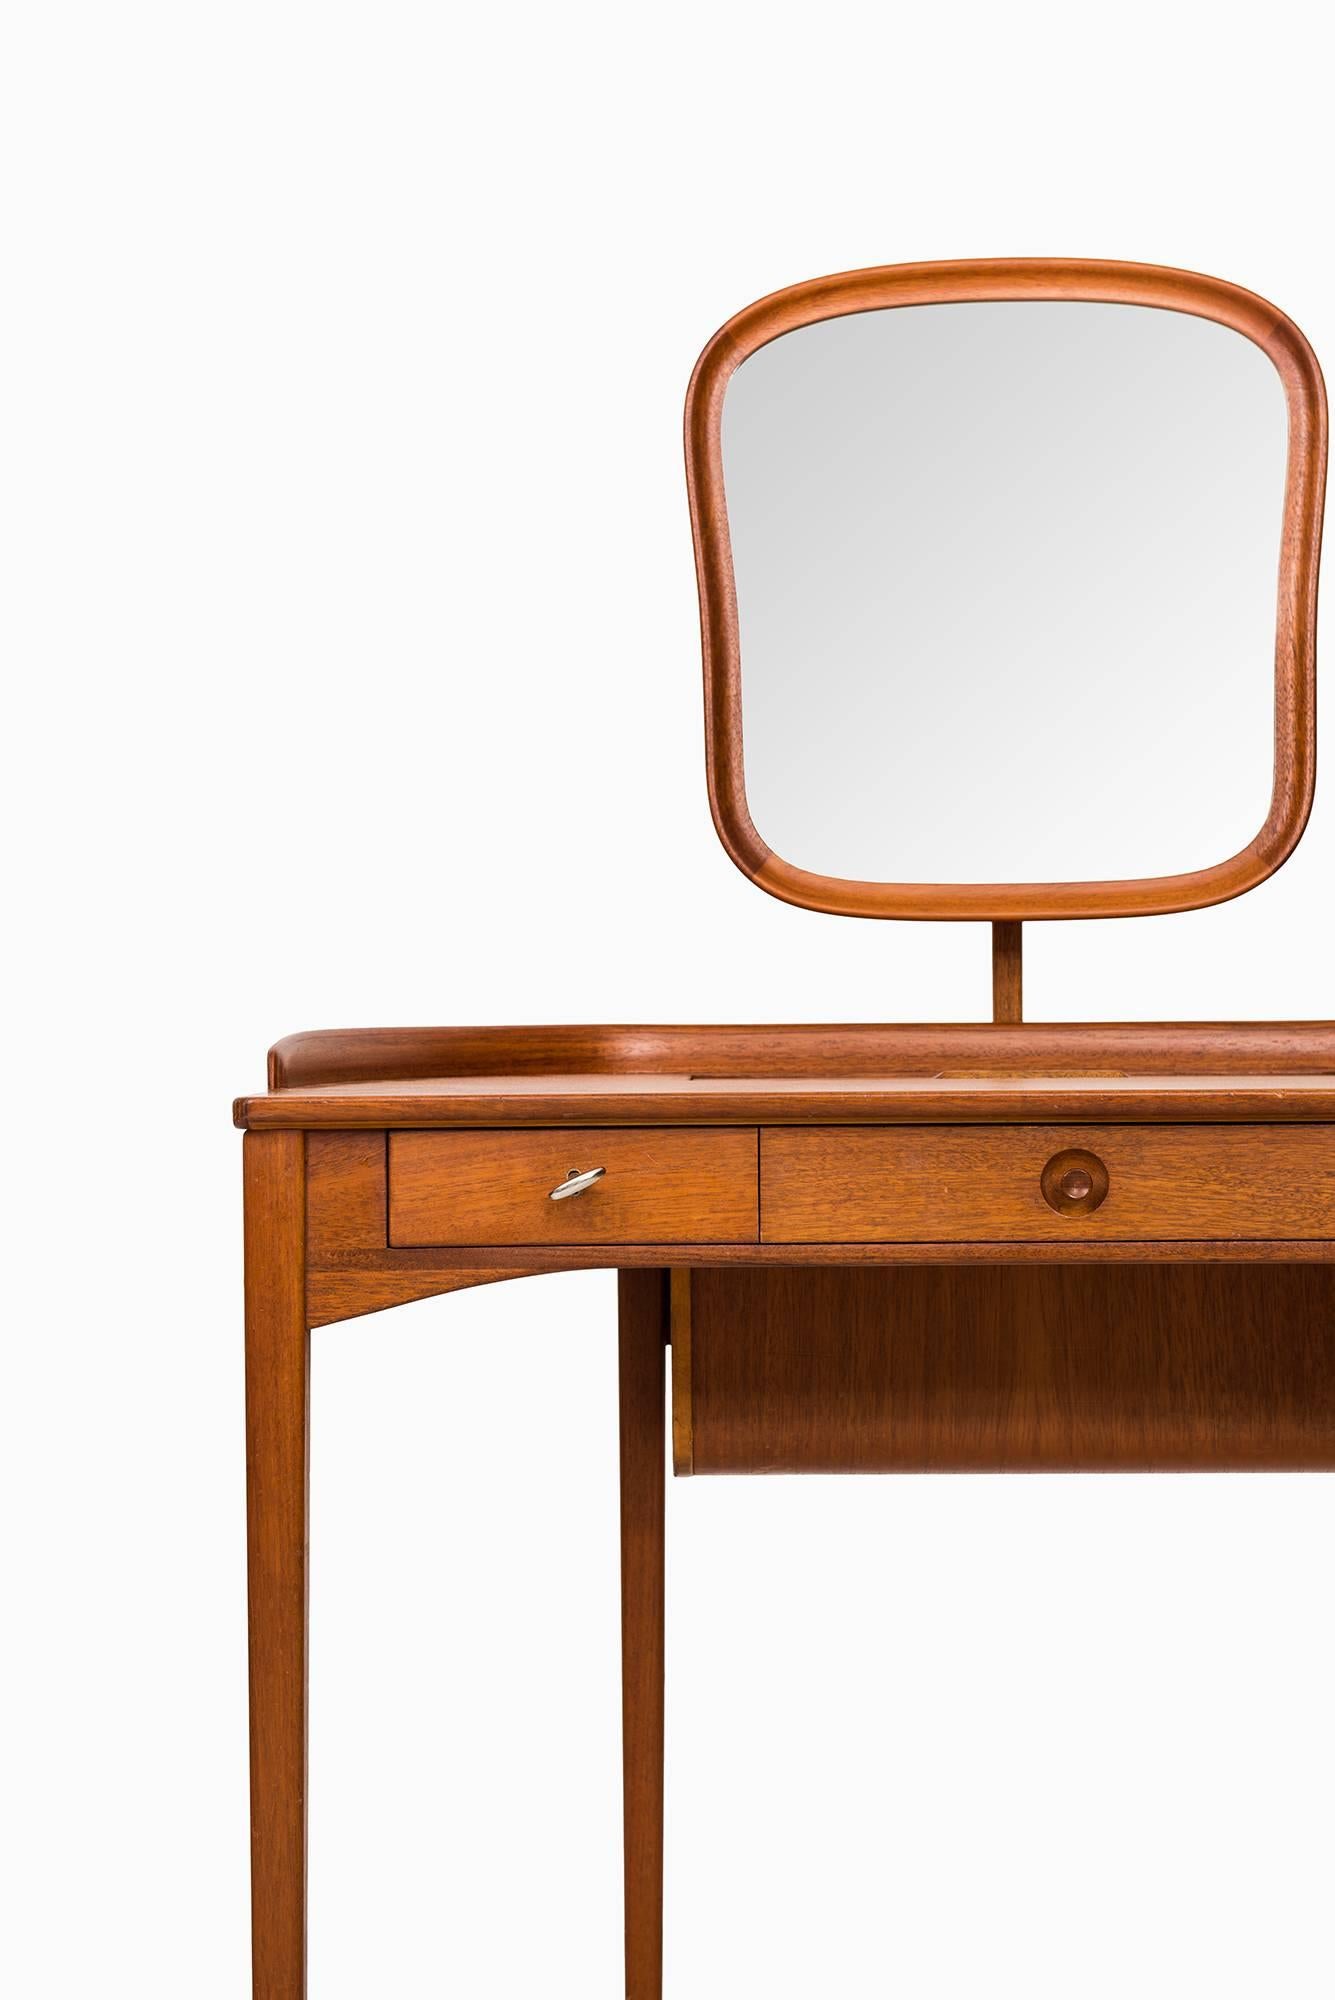 Rare vanity / ladies desk model Birgitta designed by Carl Malmsten. Produced by Bodafors in Sweden.